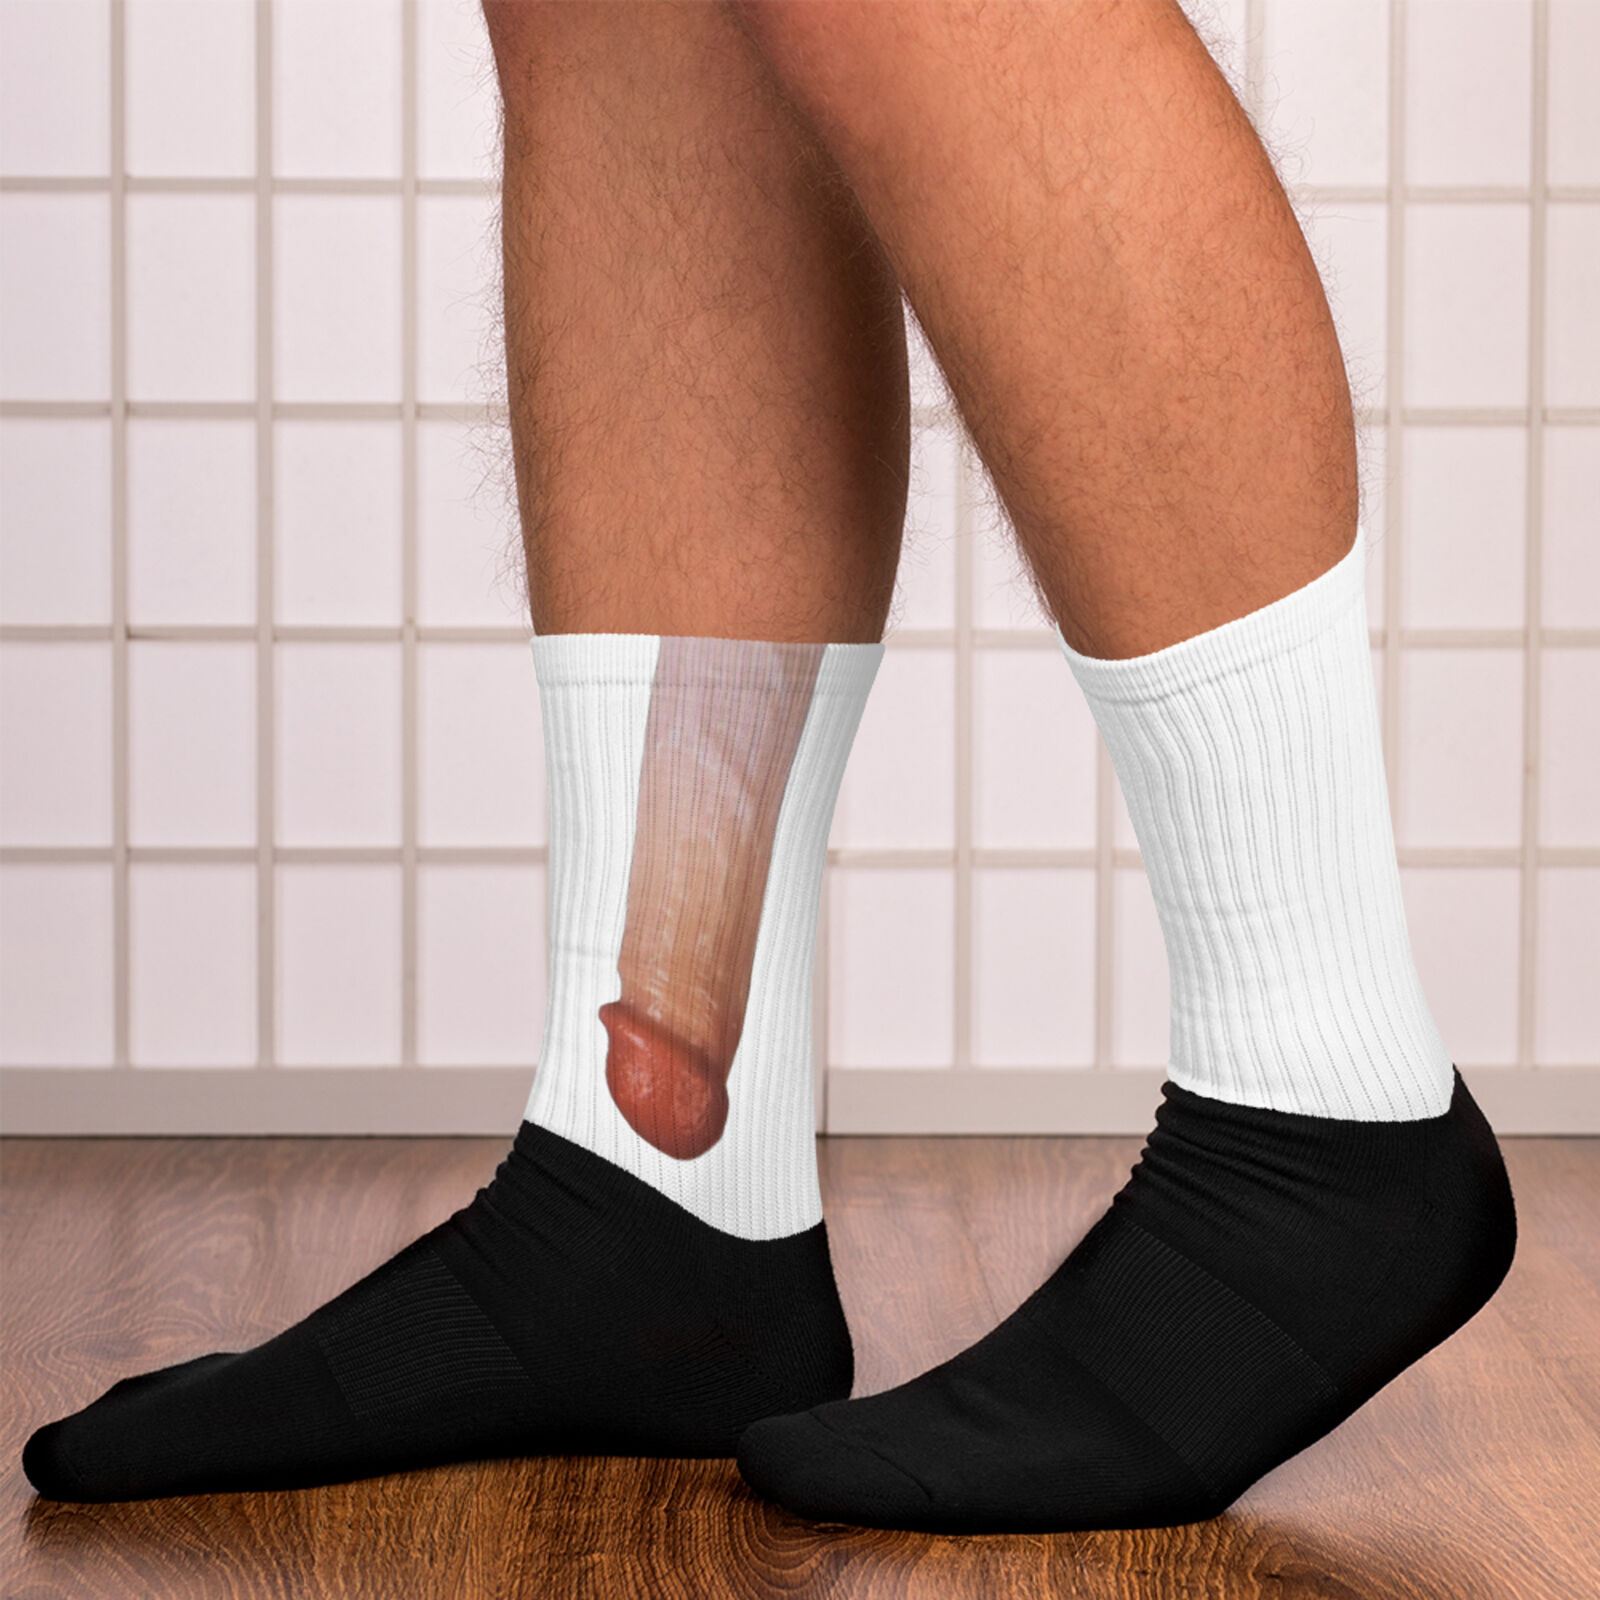 bill motsko recommends dick in a sock pic